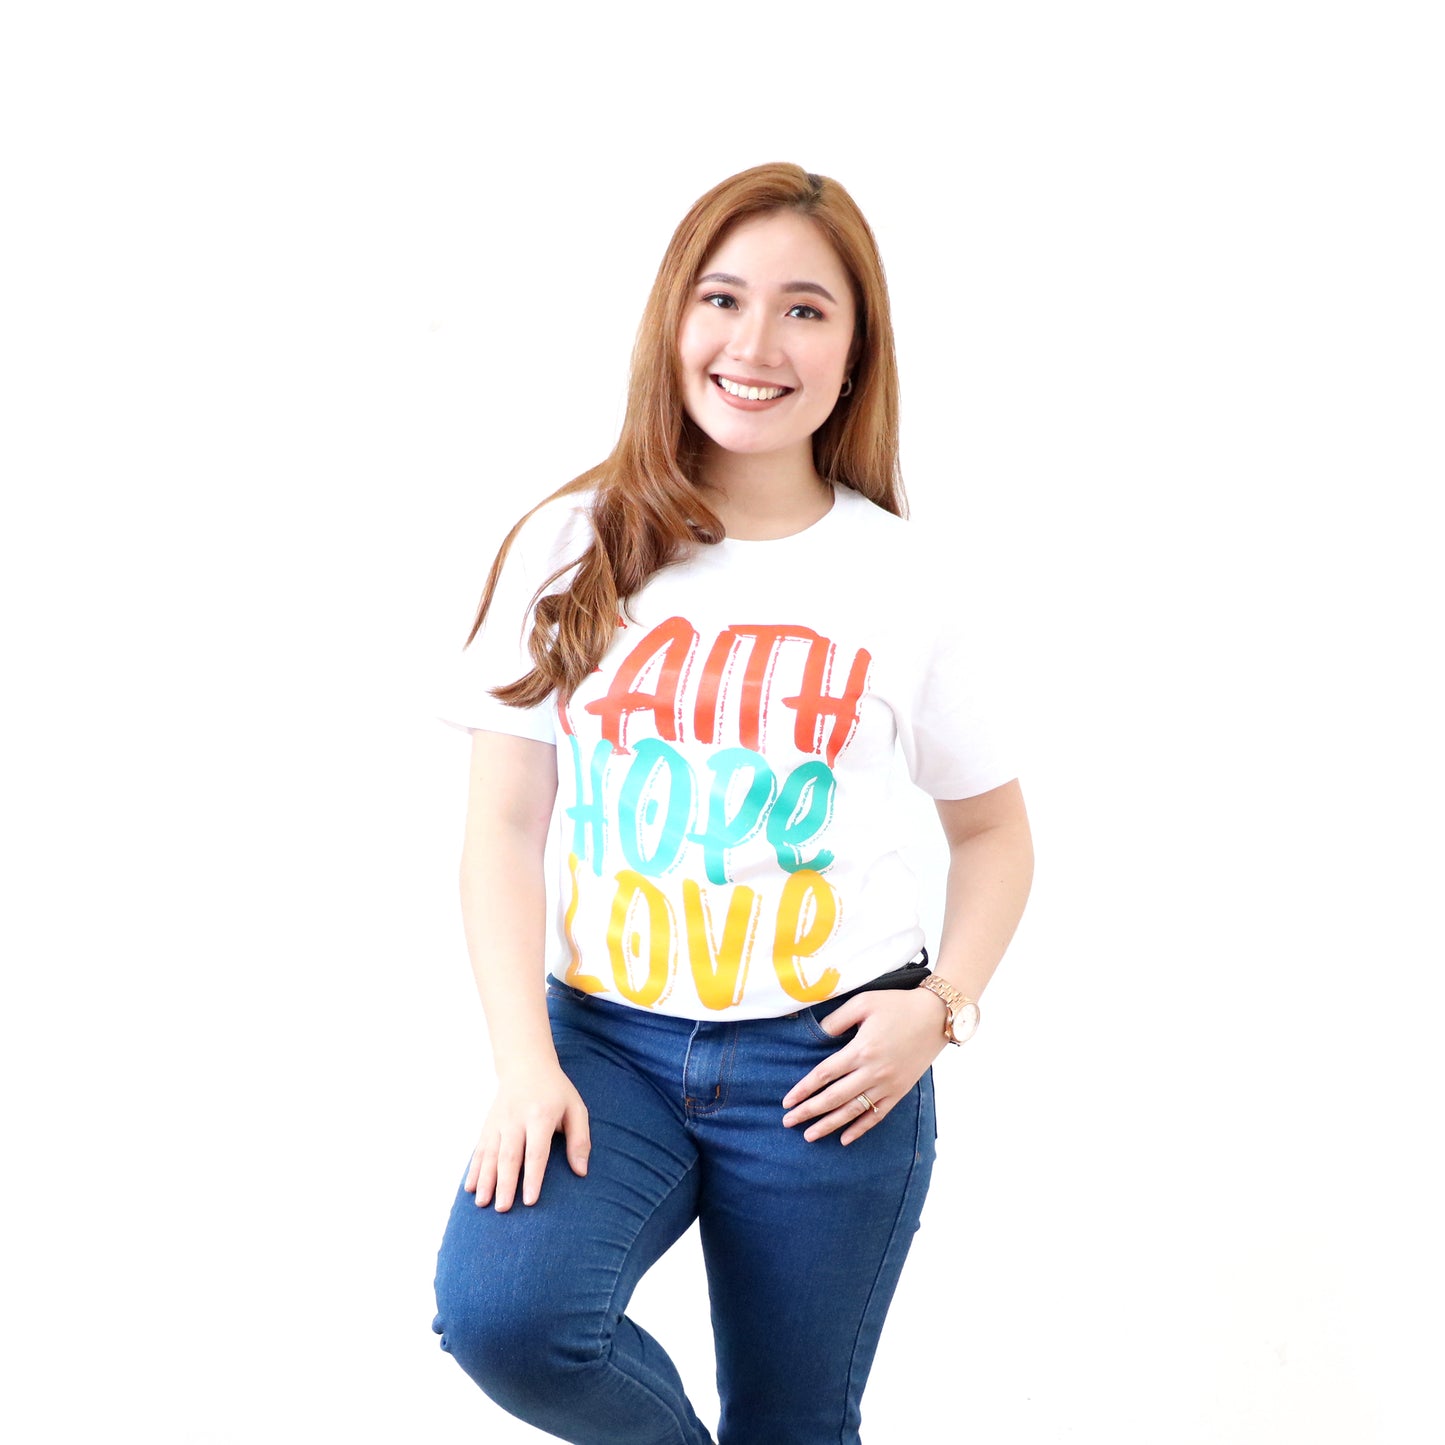 Premium-Faith Hope Love